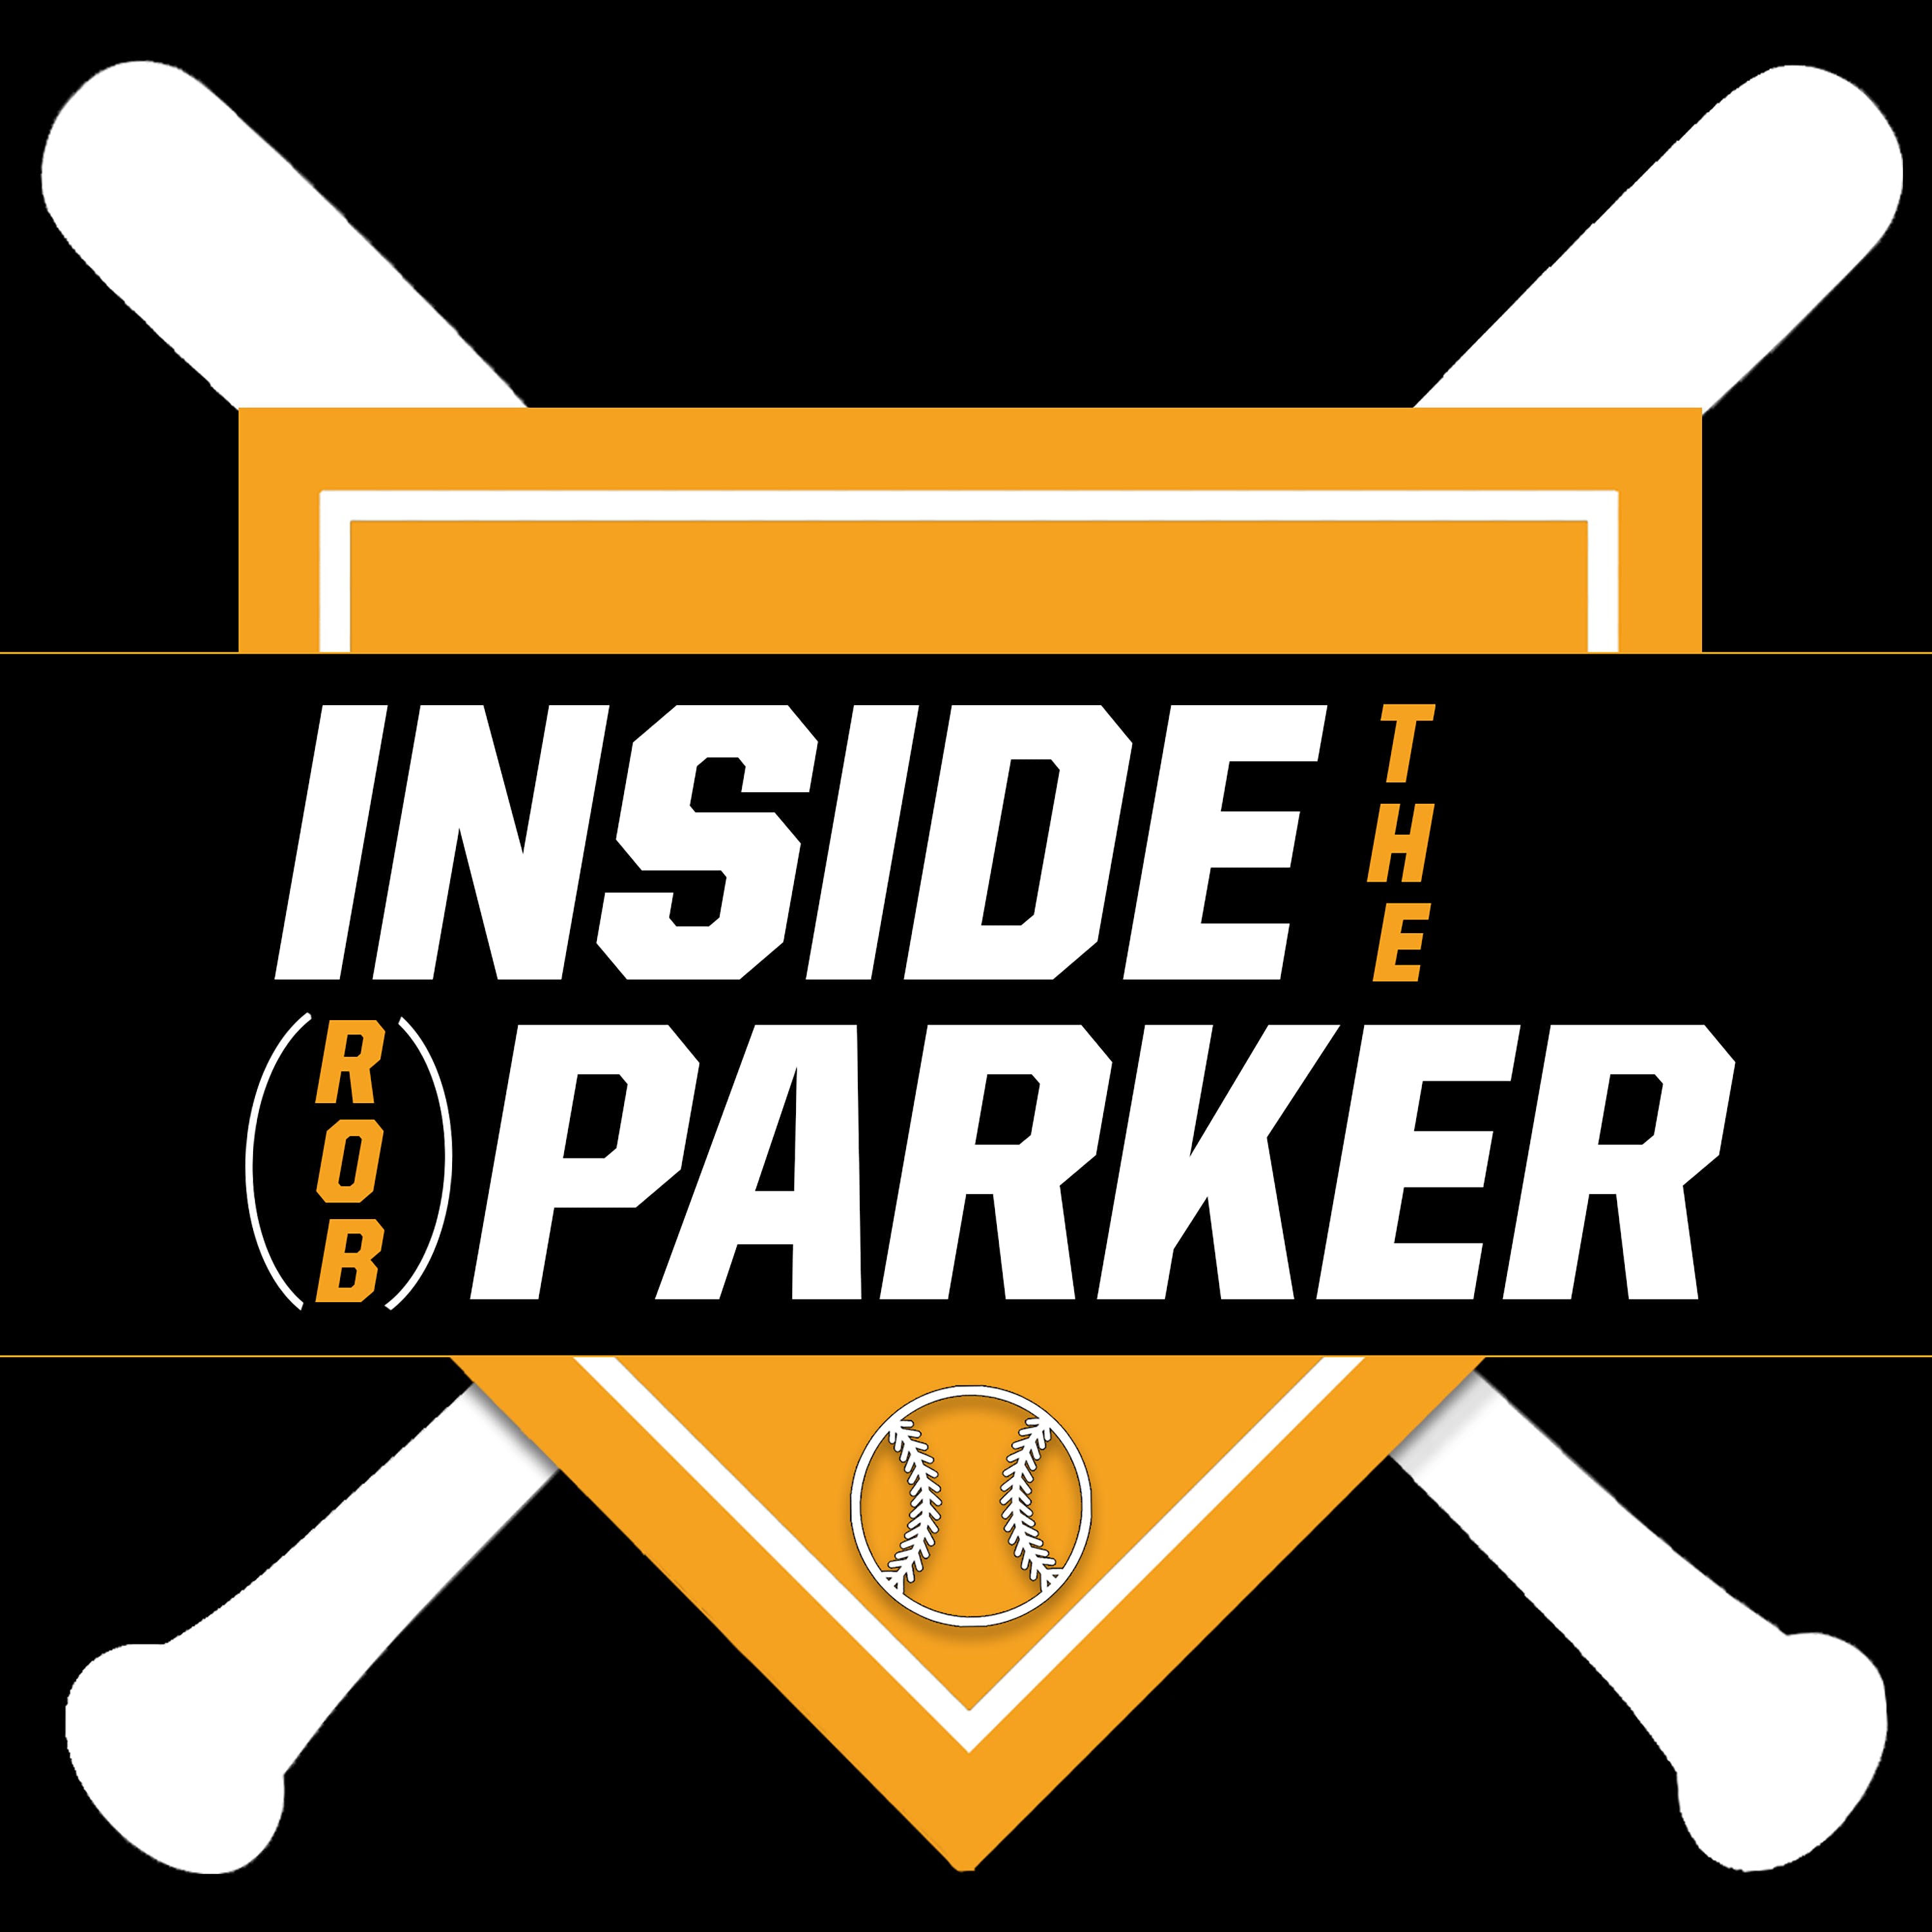 Inside the Parker: Rangers Win the World Series, 'Mr. November' Corey Seager + VSiN host Adam Burke